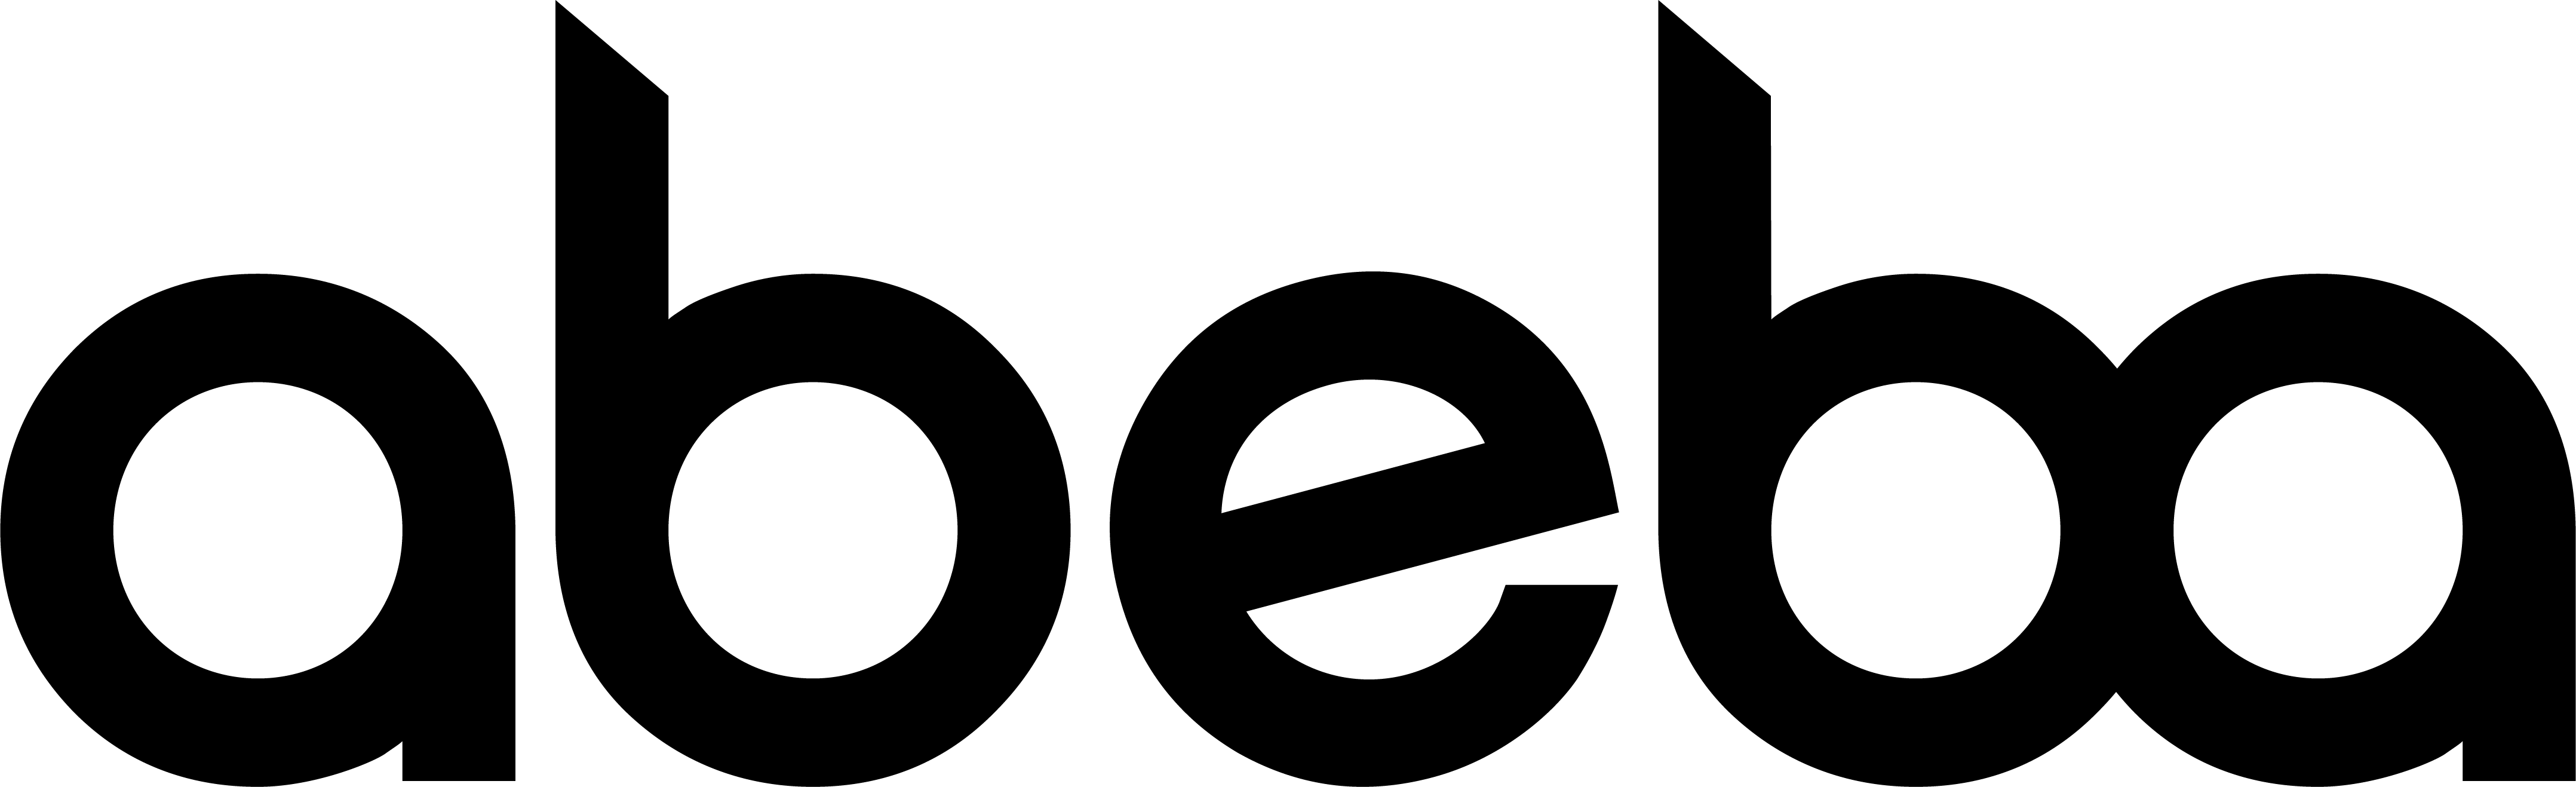 Abeba logo